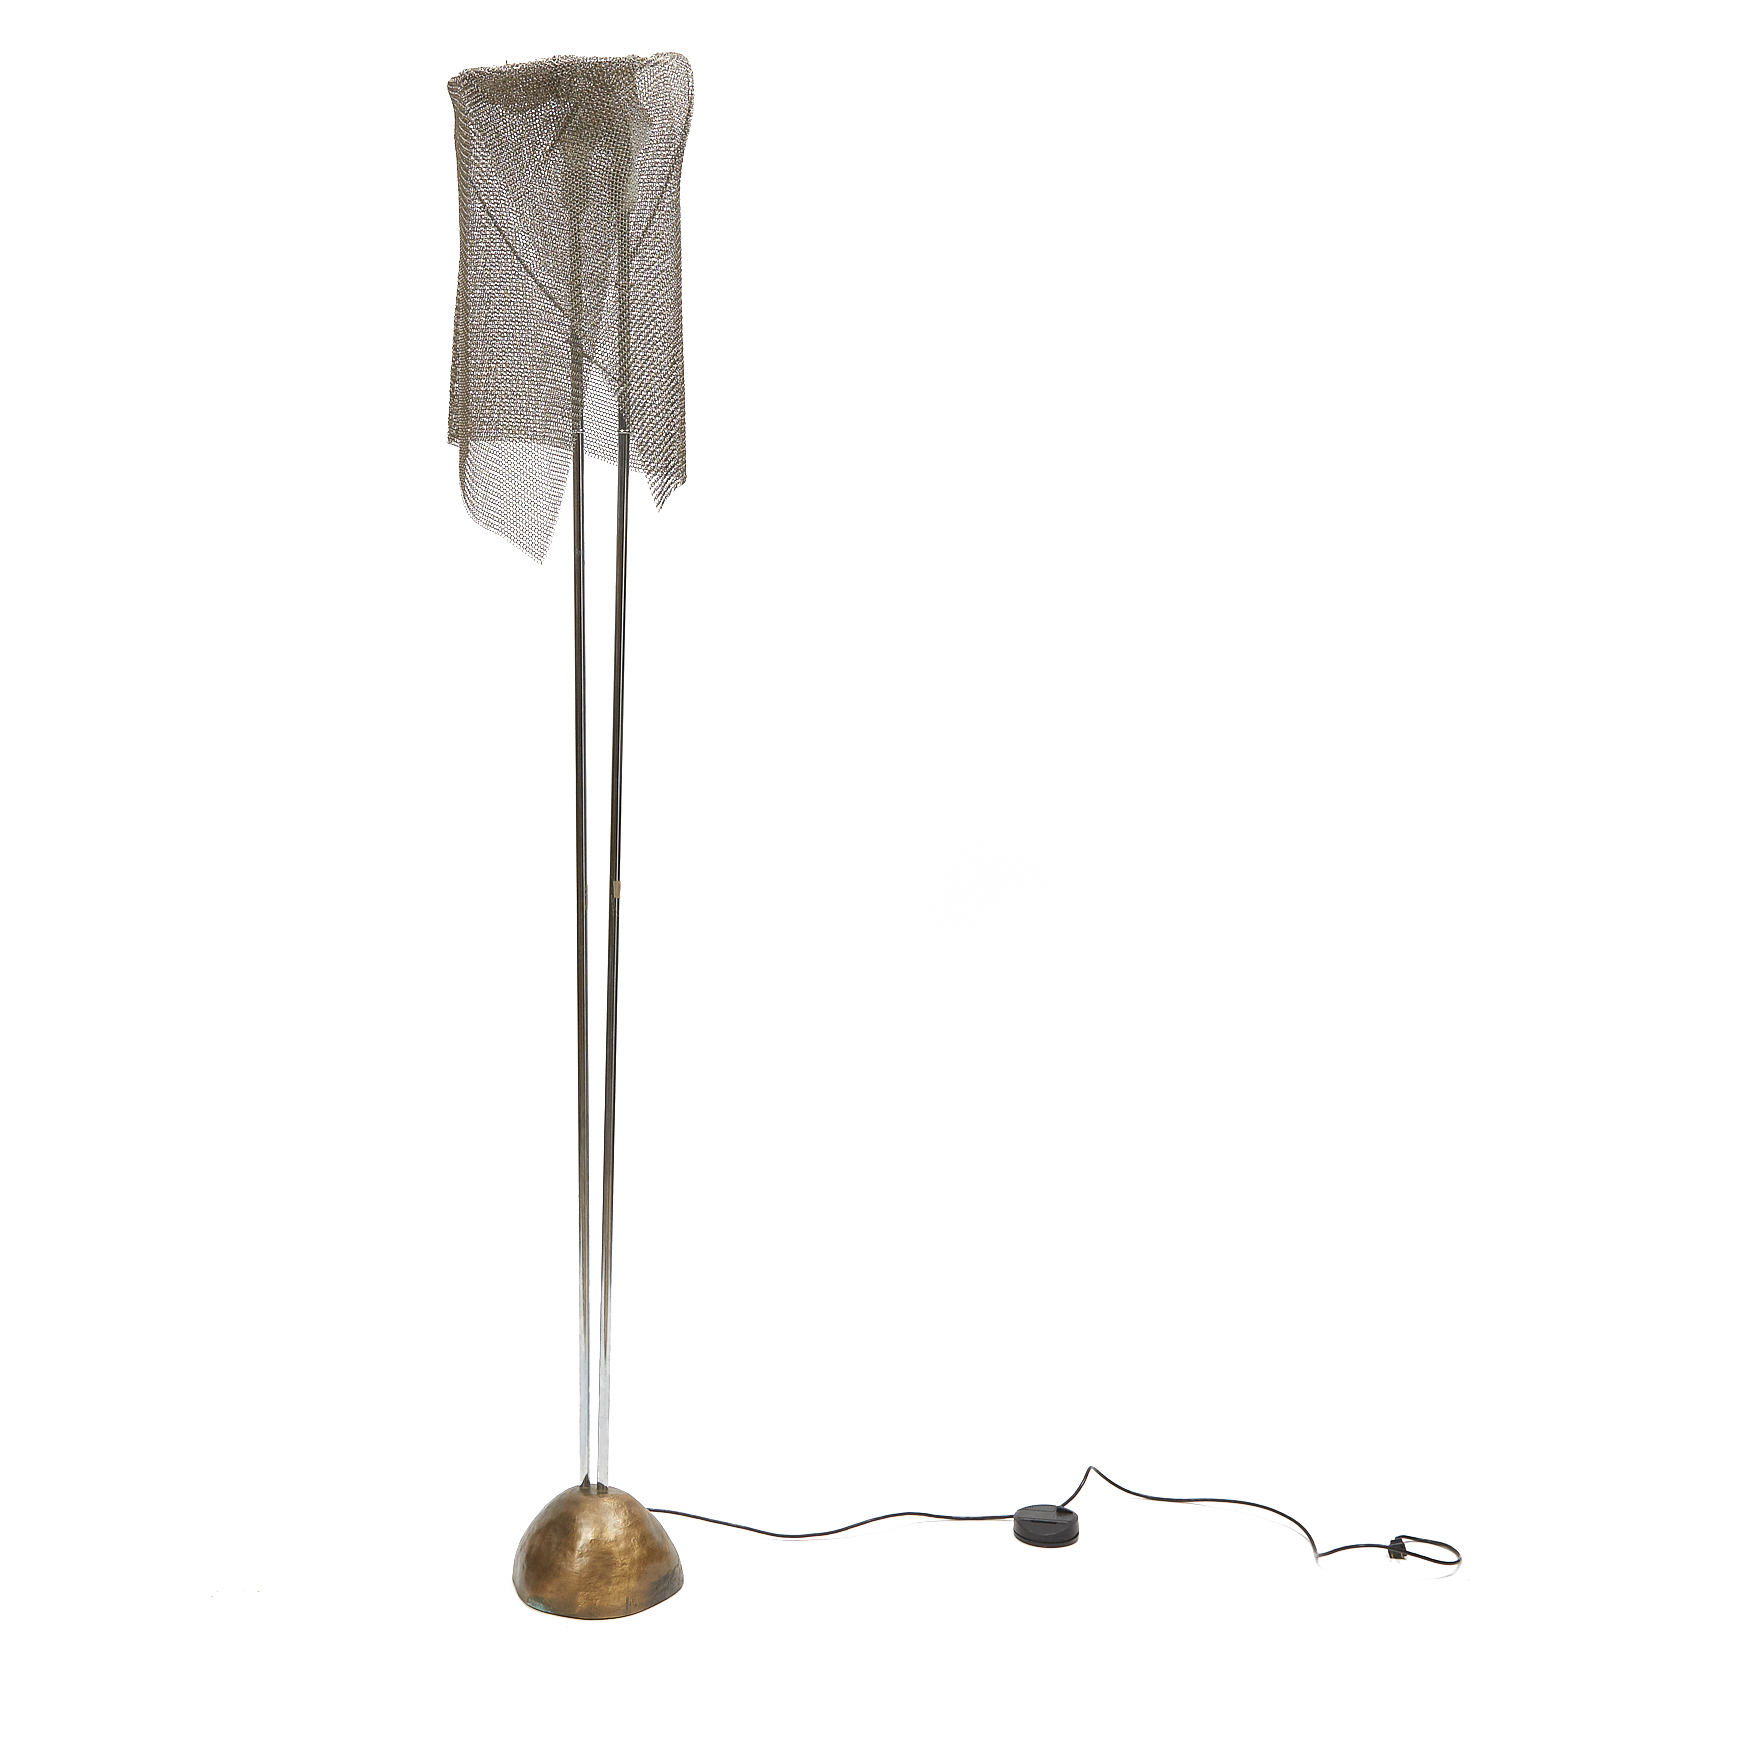 Toni Cordero (Italian, 1937-2001) for Artemide 'Anchise' Floor Lamp, c.1990